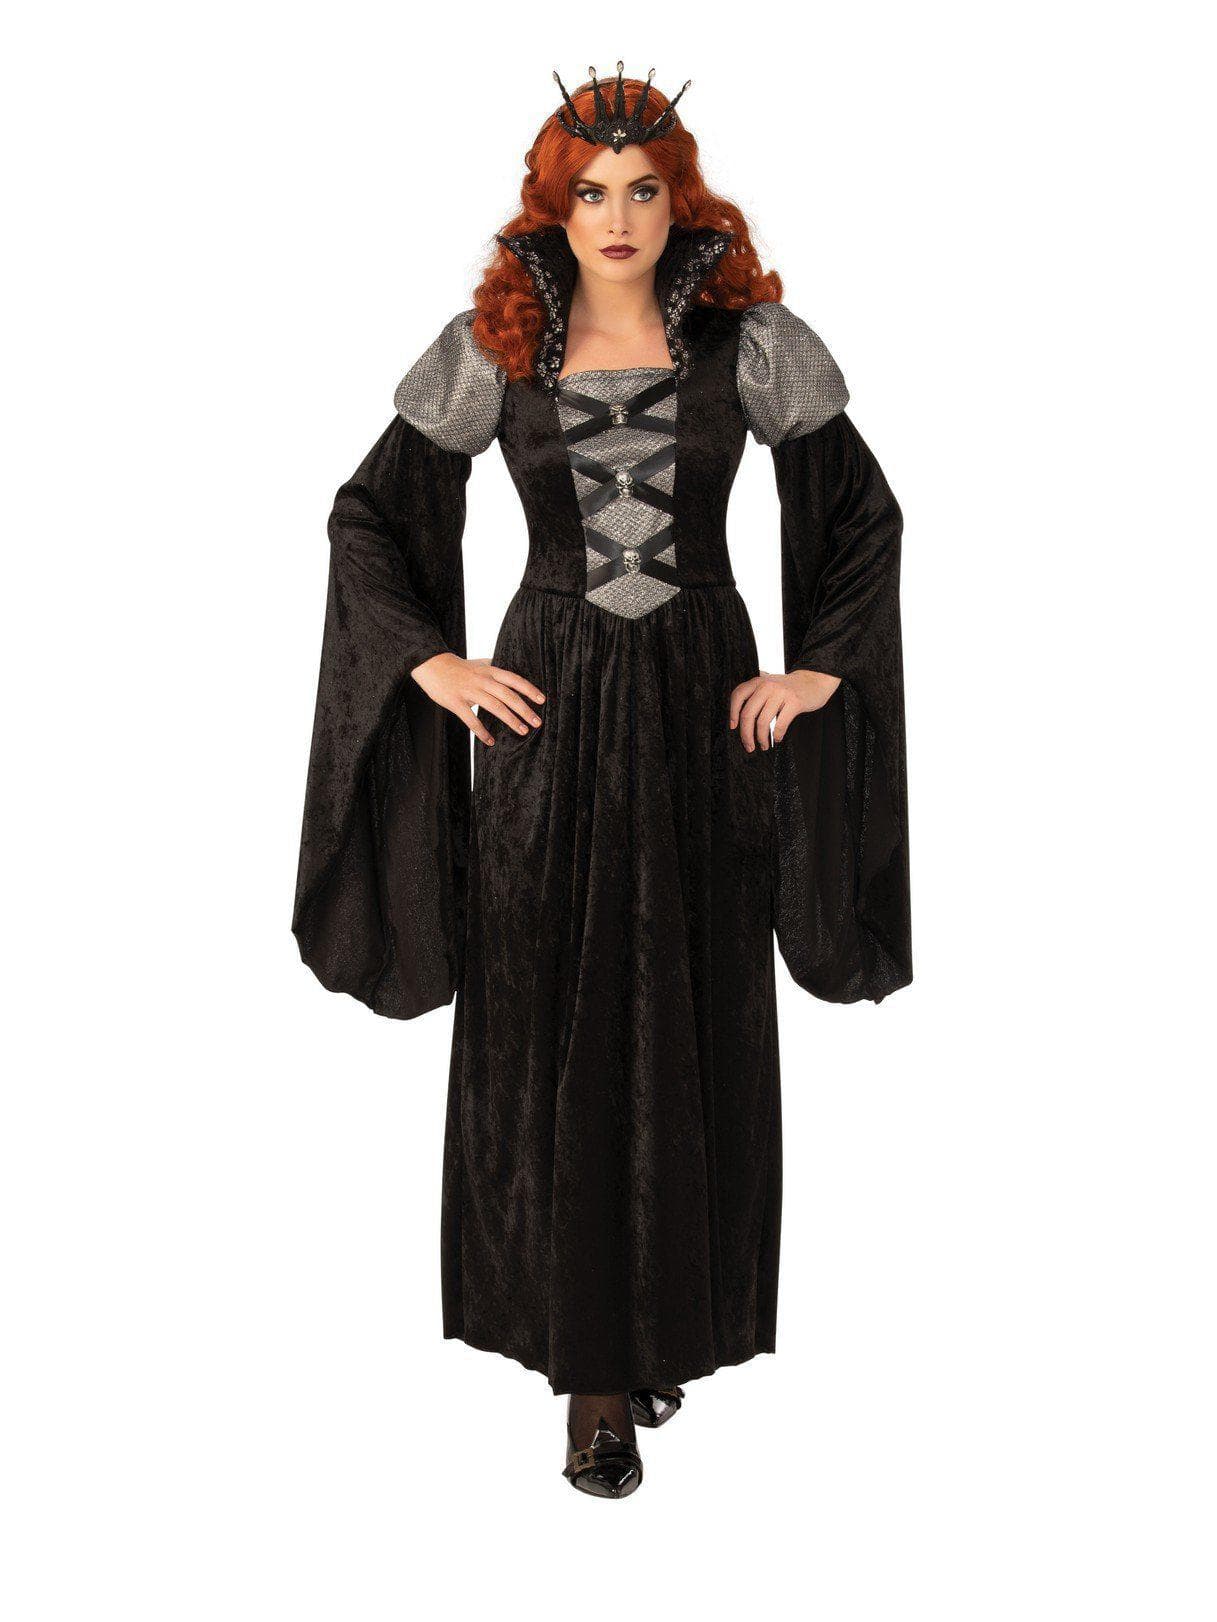 Adult Dark Queen Costume - costumes.com